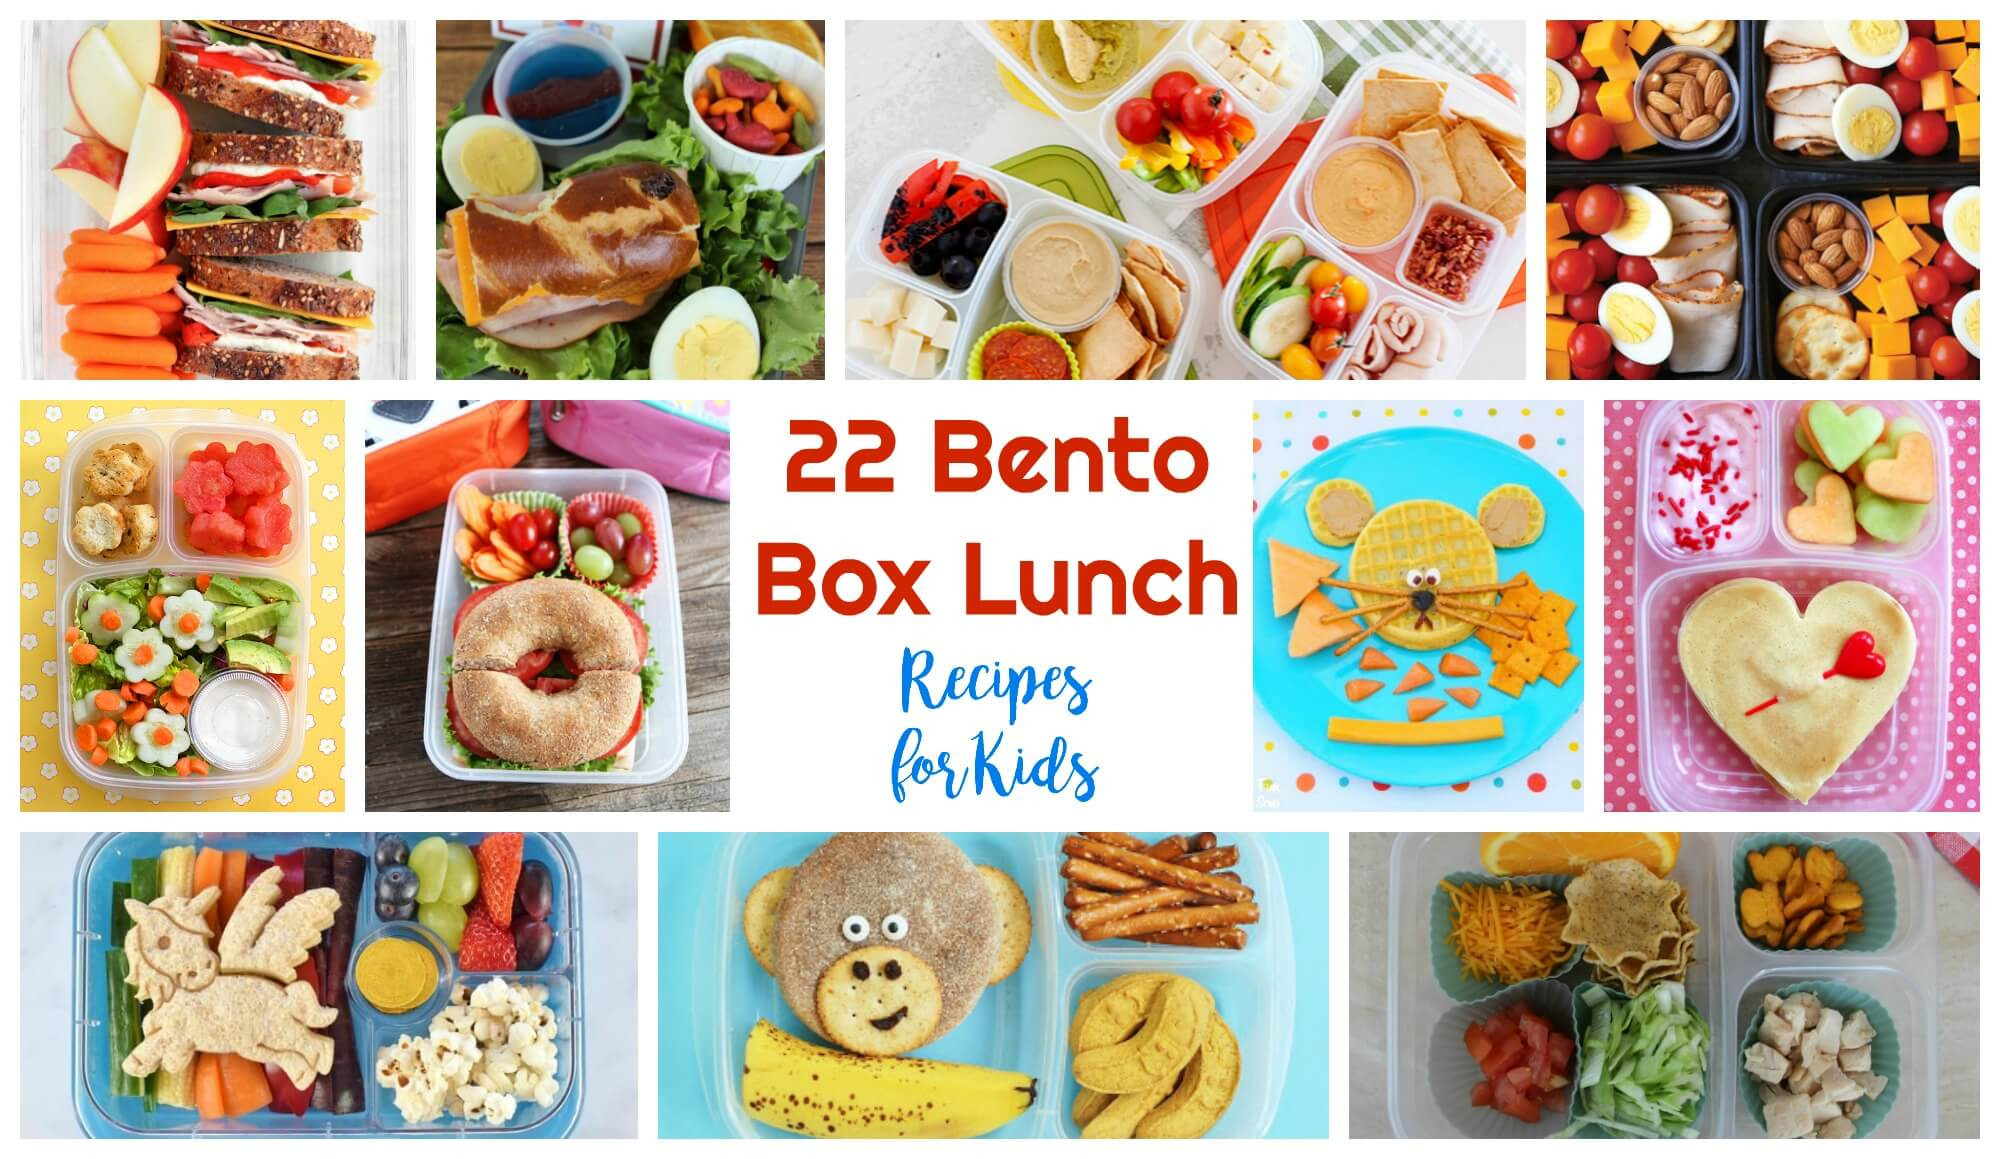 Bento Box Recipes For Kids
 22 Bento Box Lunch Recipes for Kids